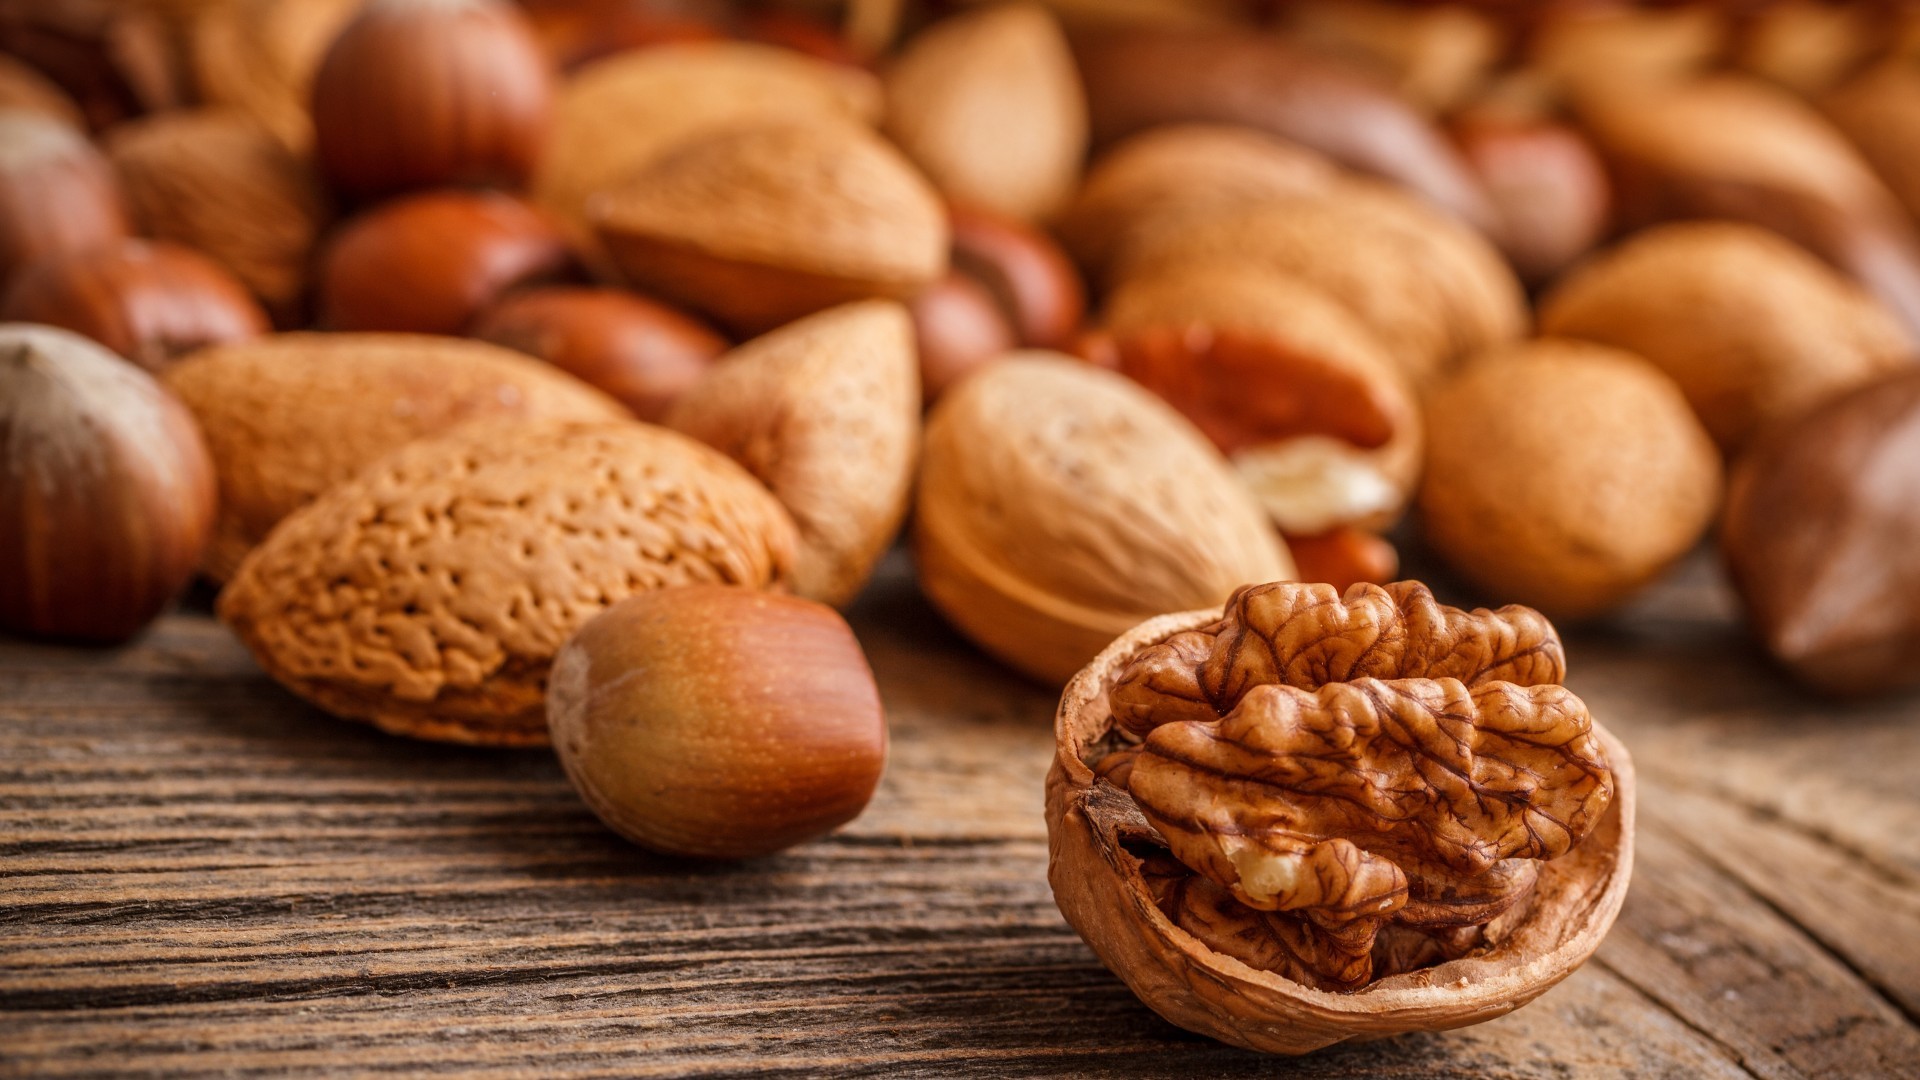 General 1920x1080 nuts closeup food wooden surface walnuts